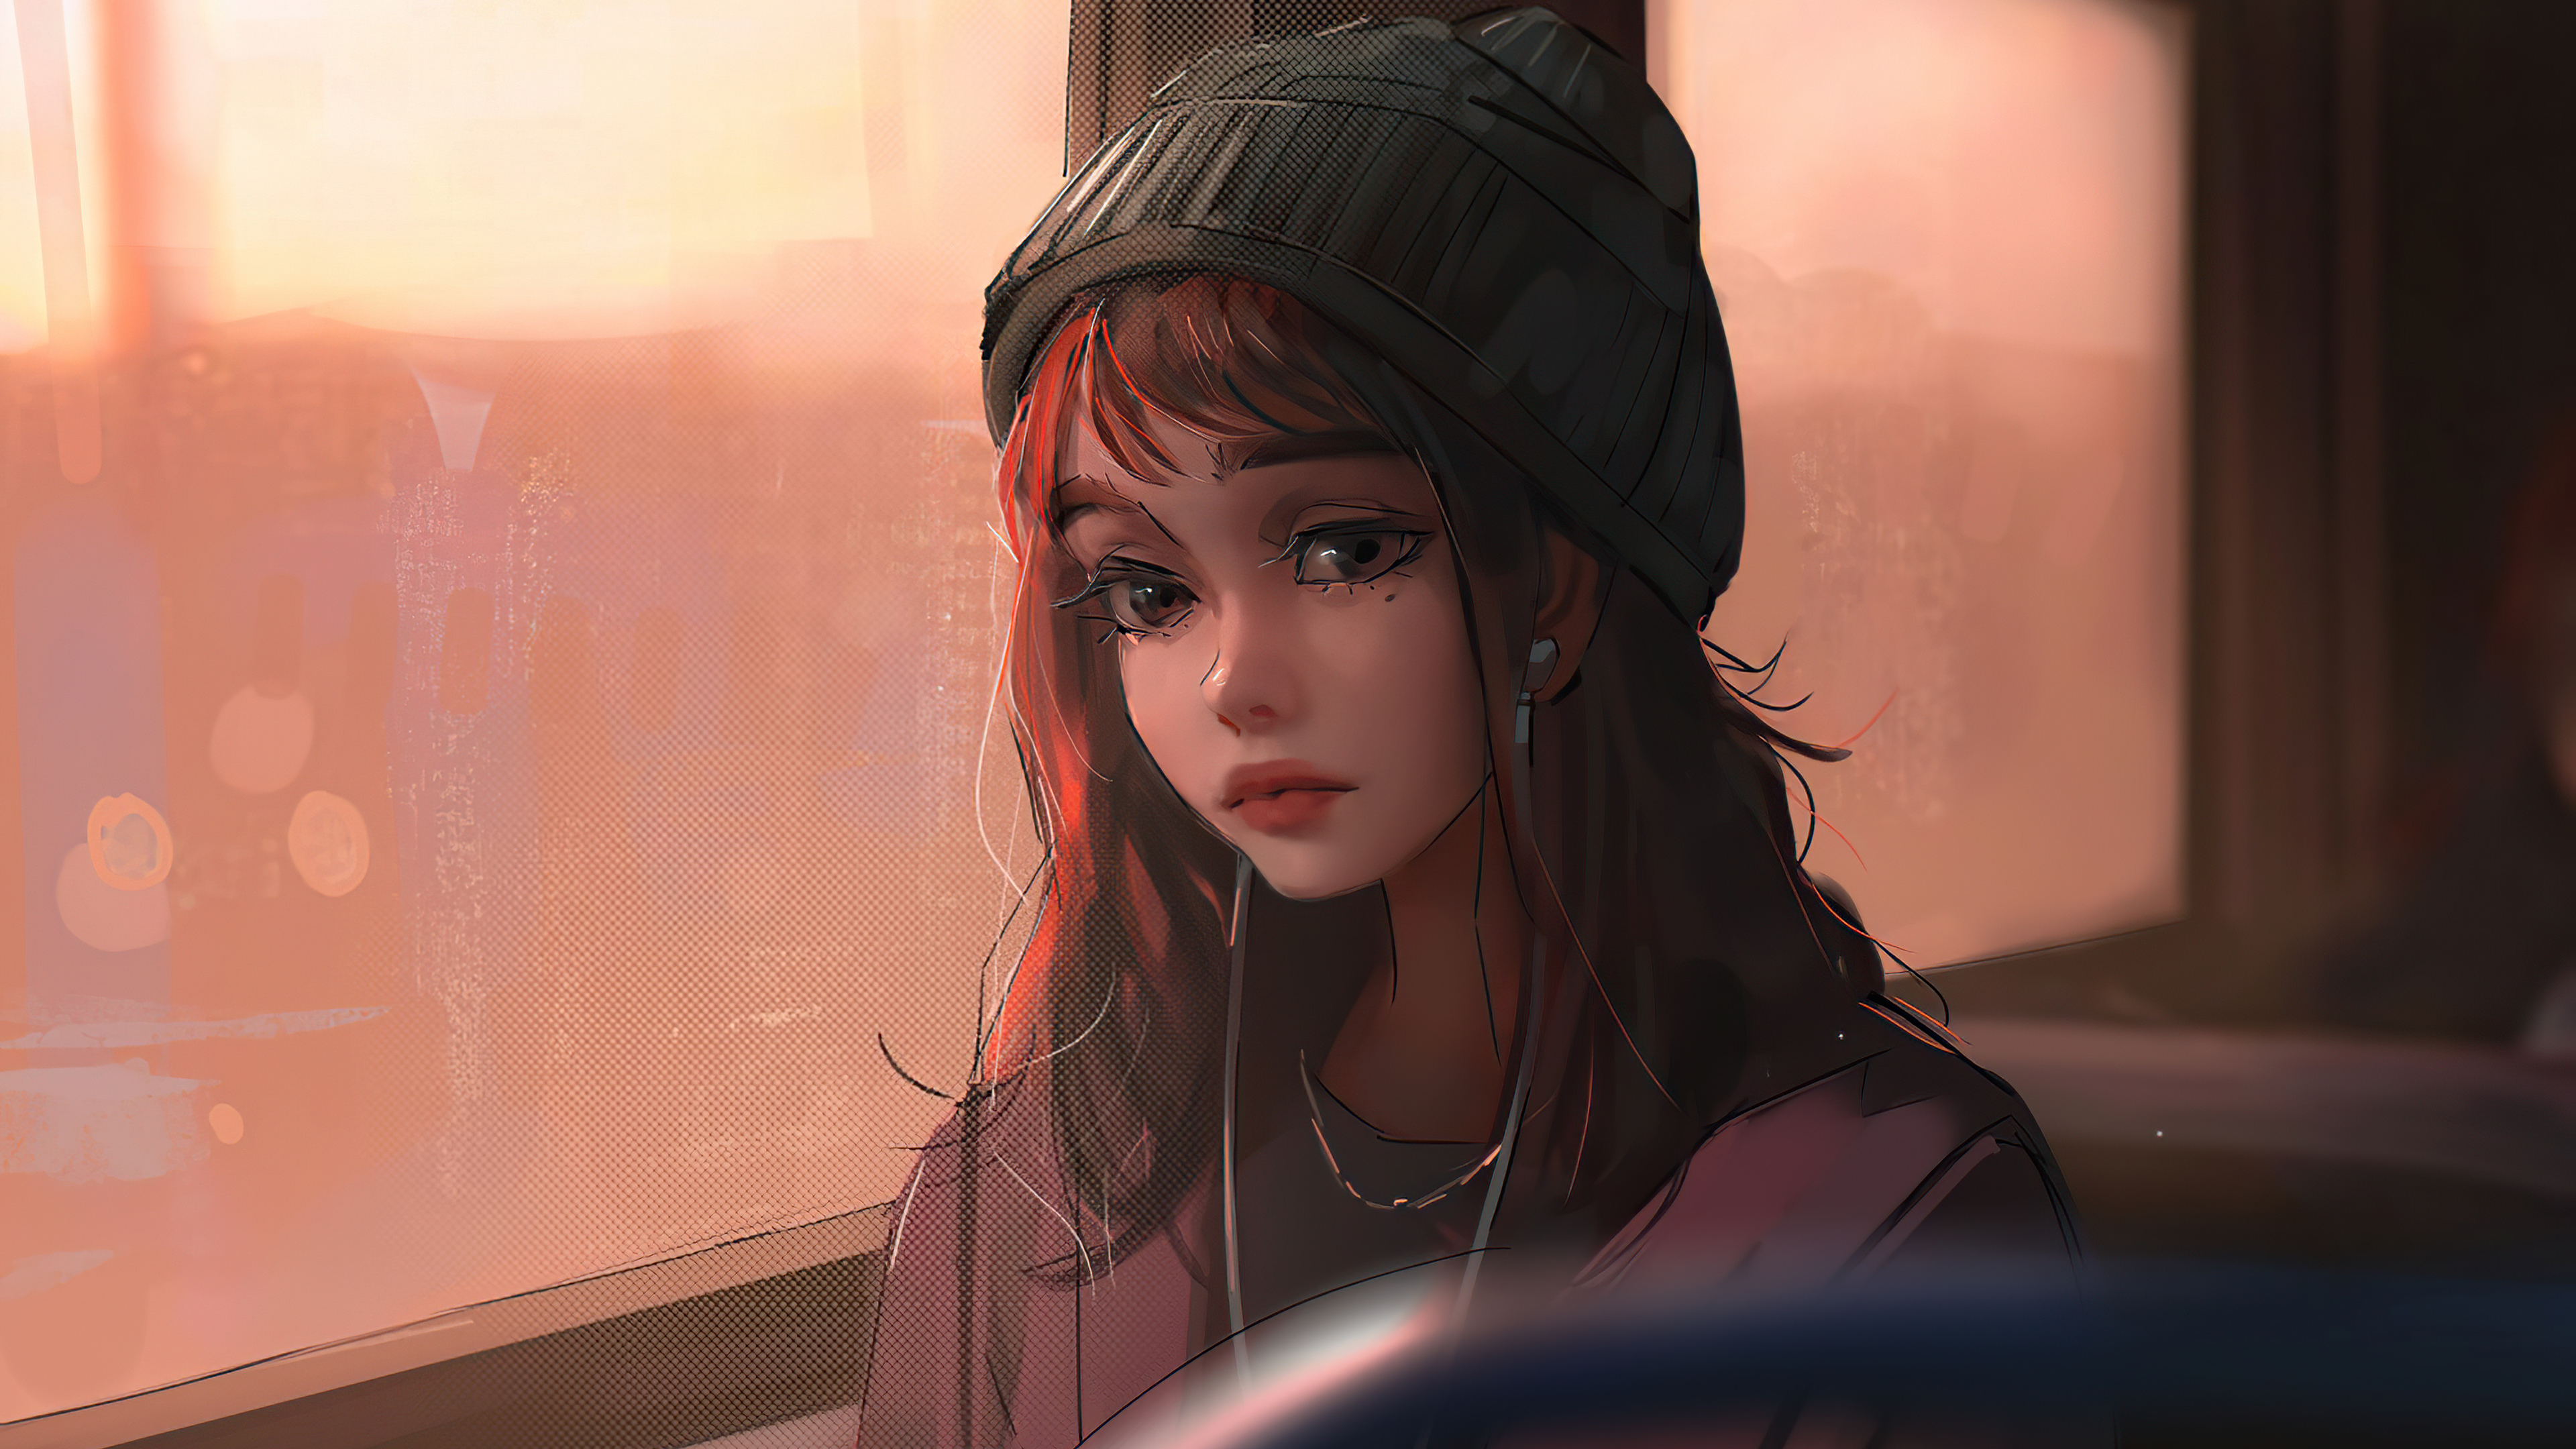 Rendering of a sad girl wearing headphones sitting by the window